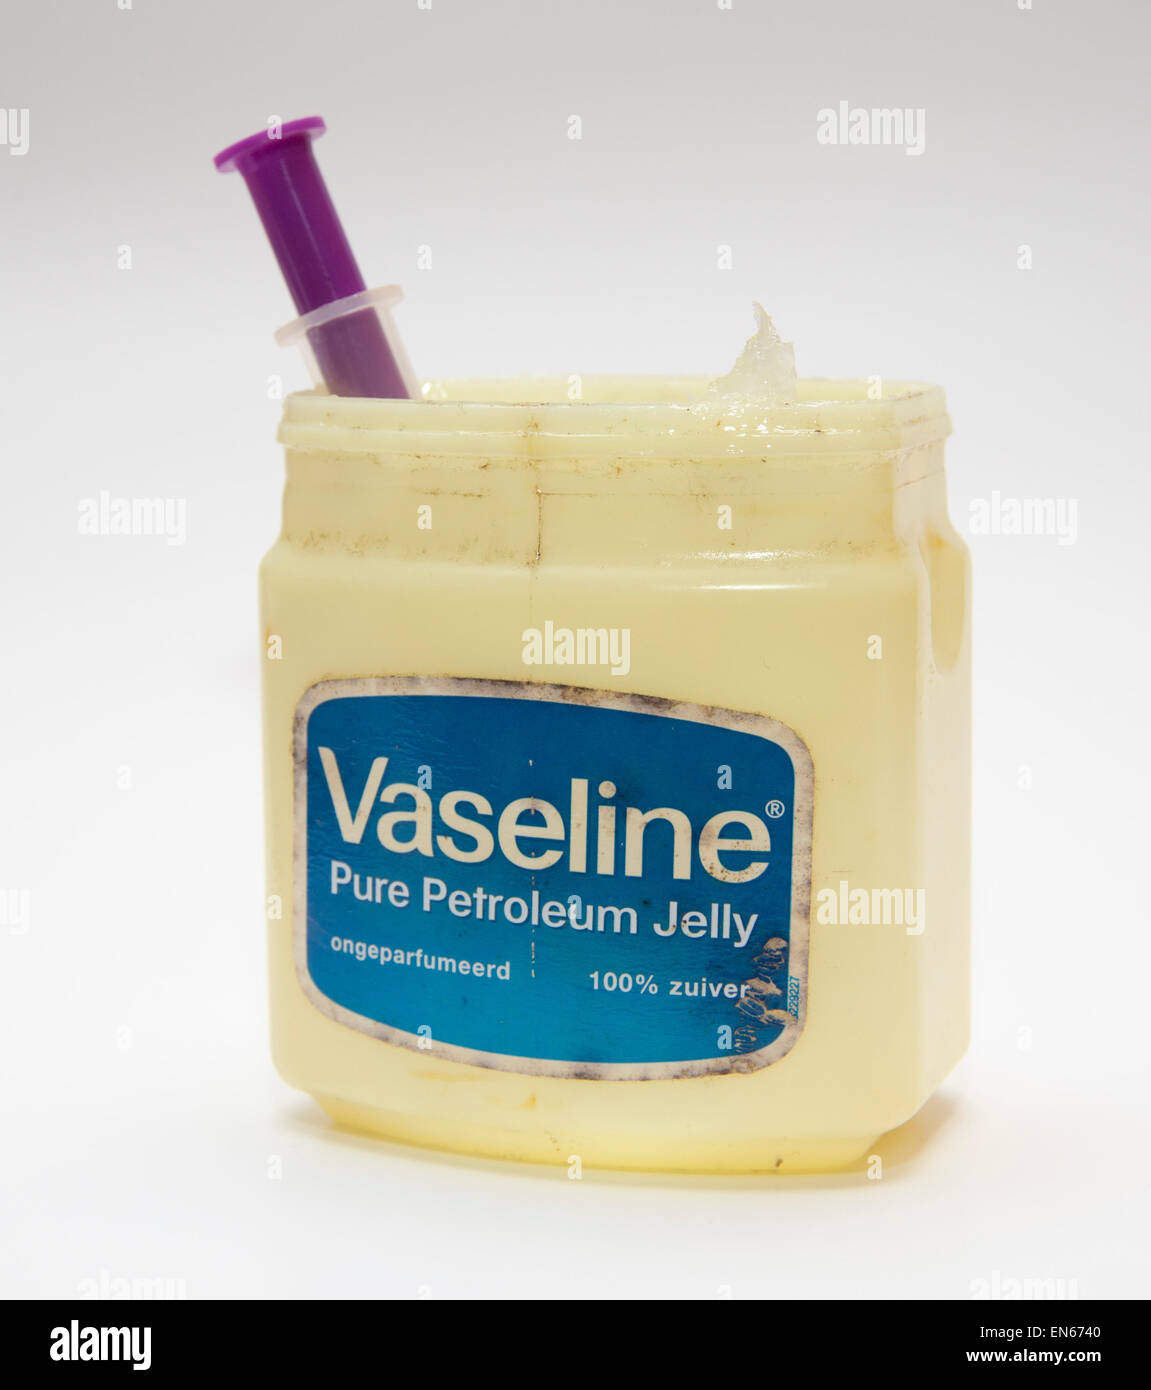 Vasca di vaselina vaselina contenente una siringa, isolato su sfondo bianco  Foto stock - Alamy